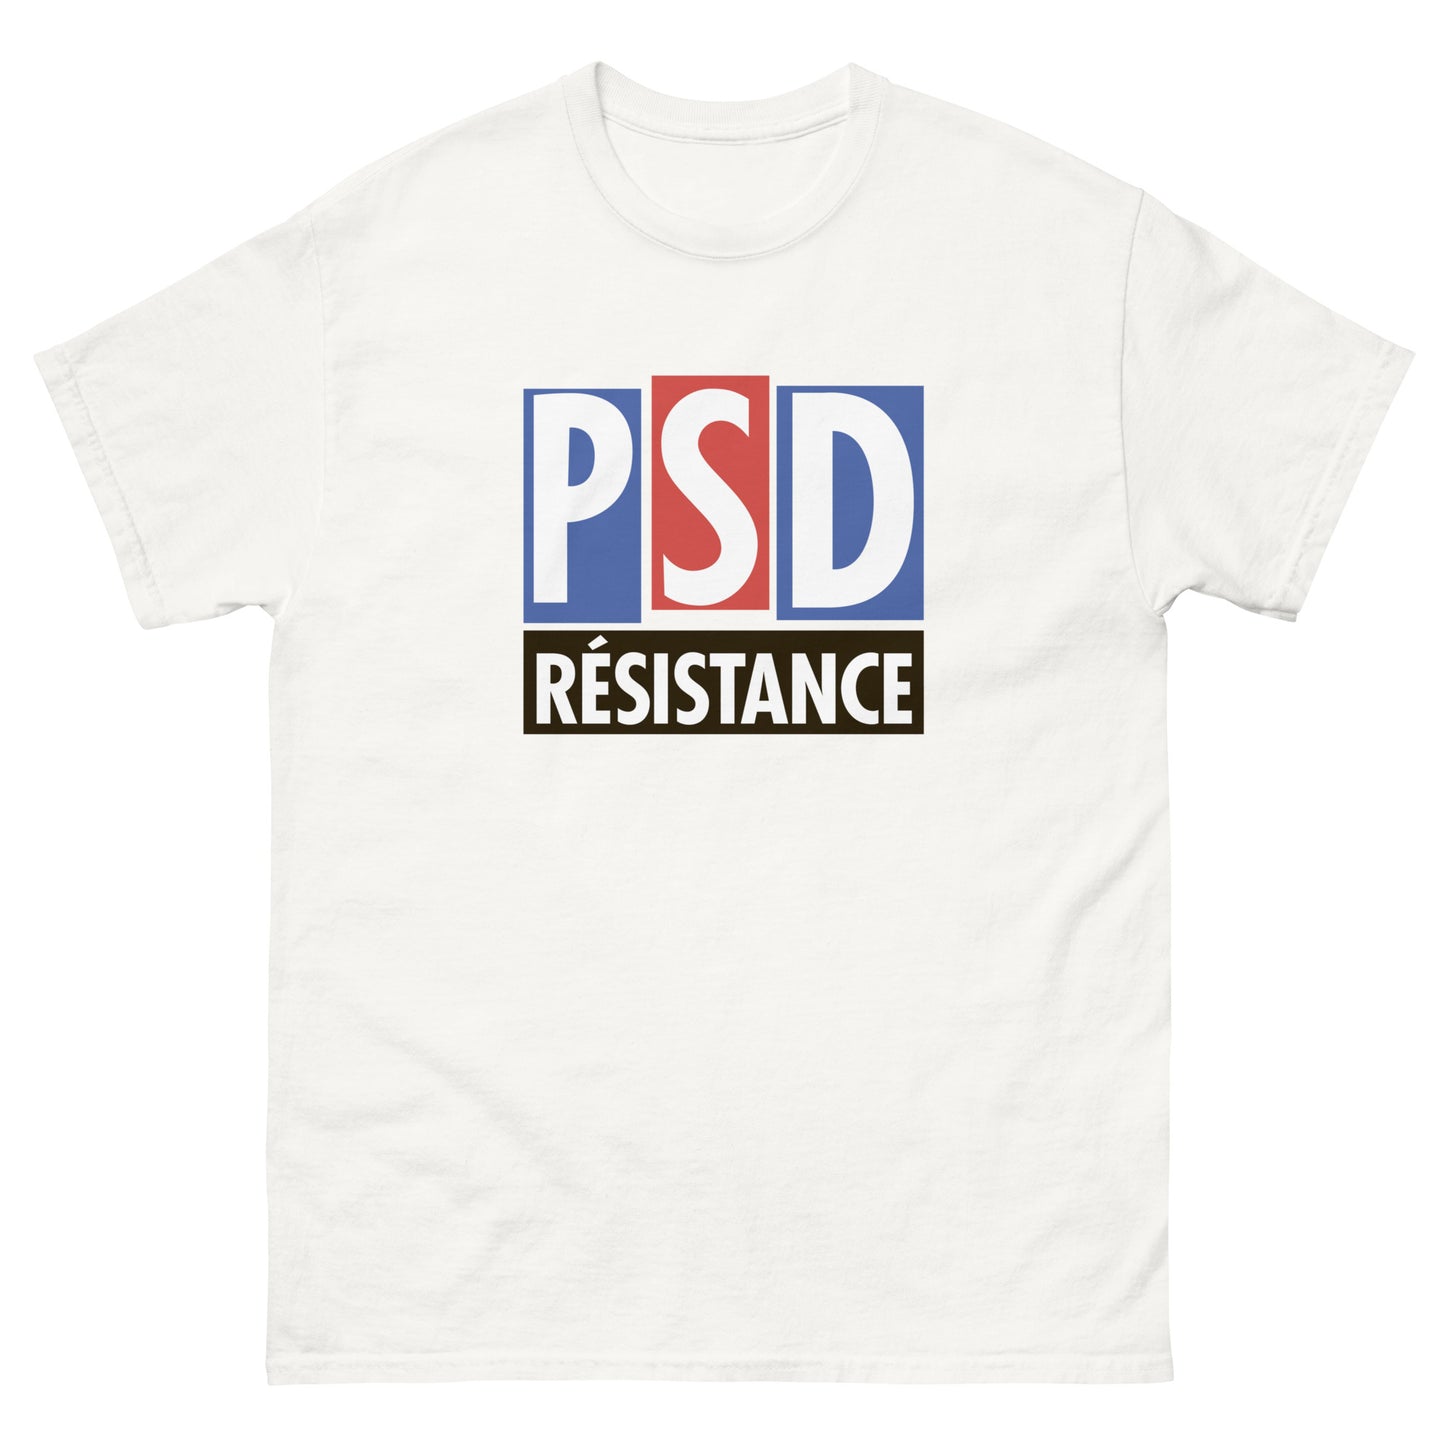 PSD Résistance Tee